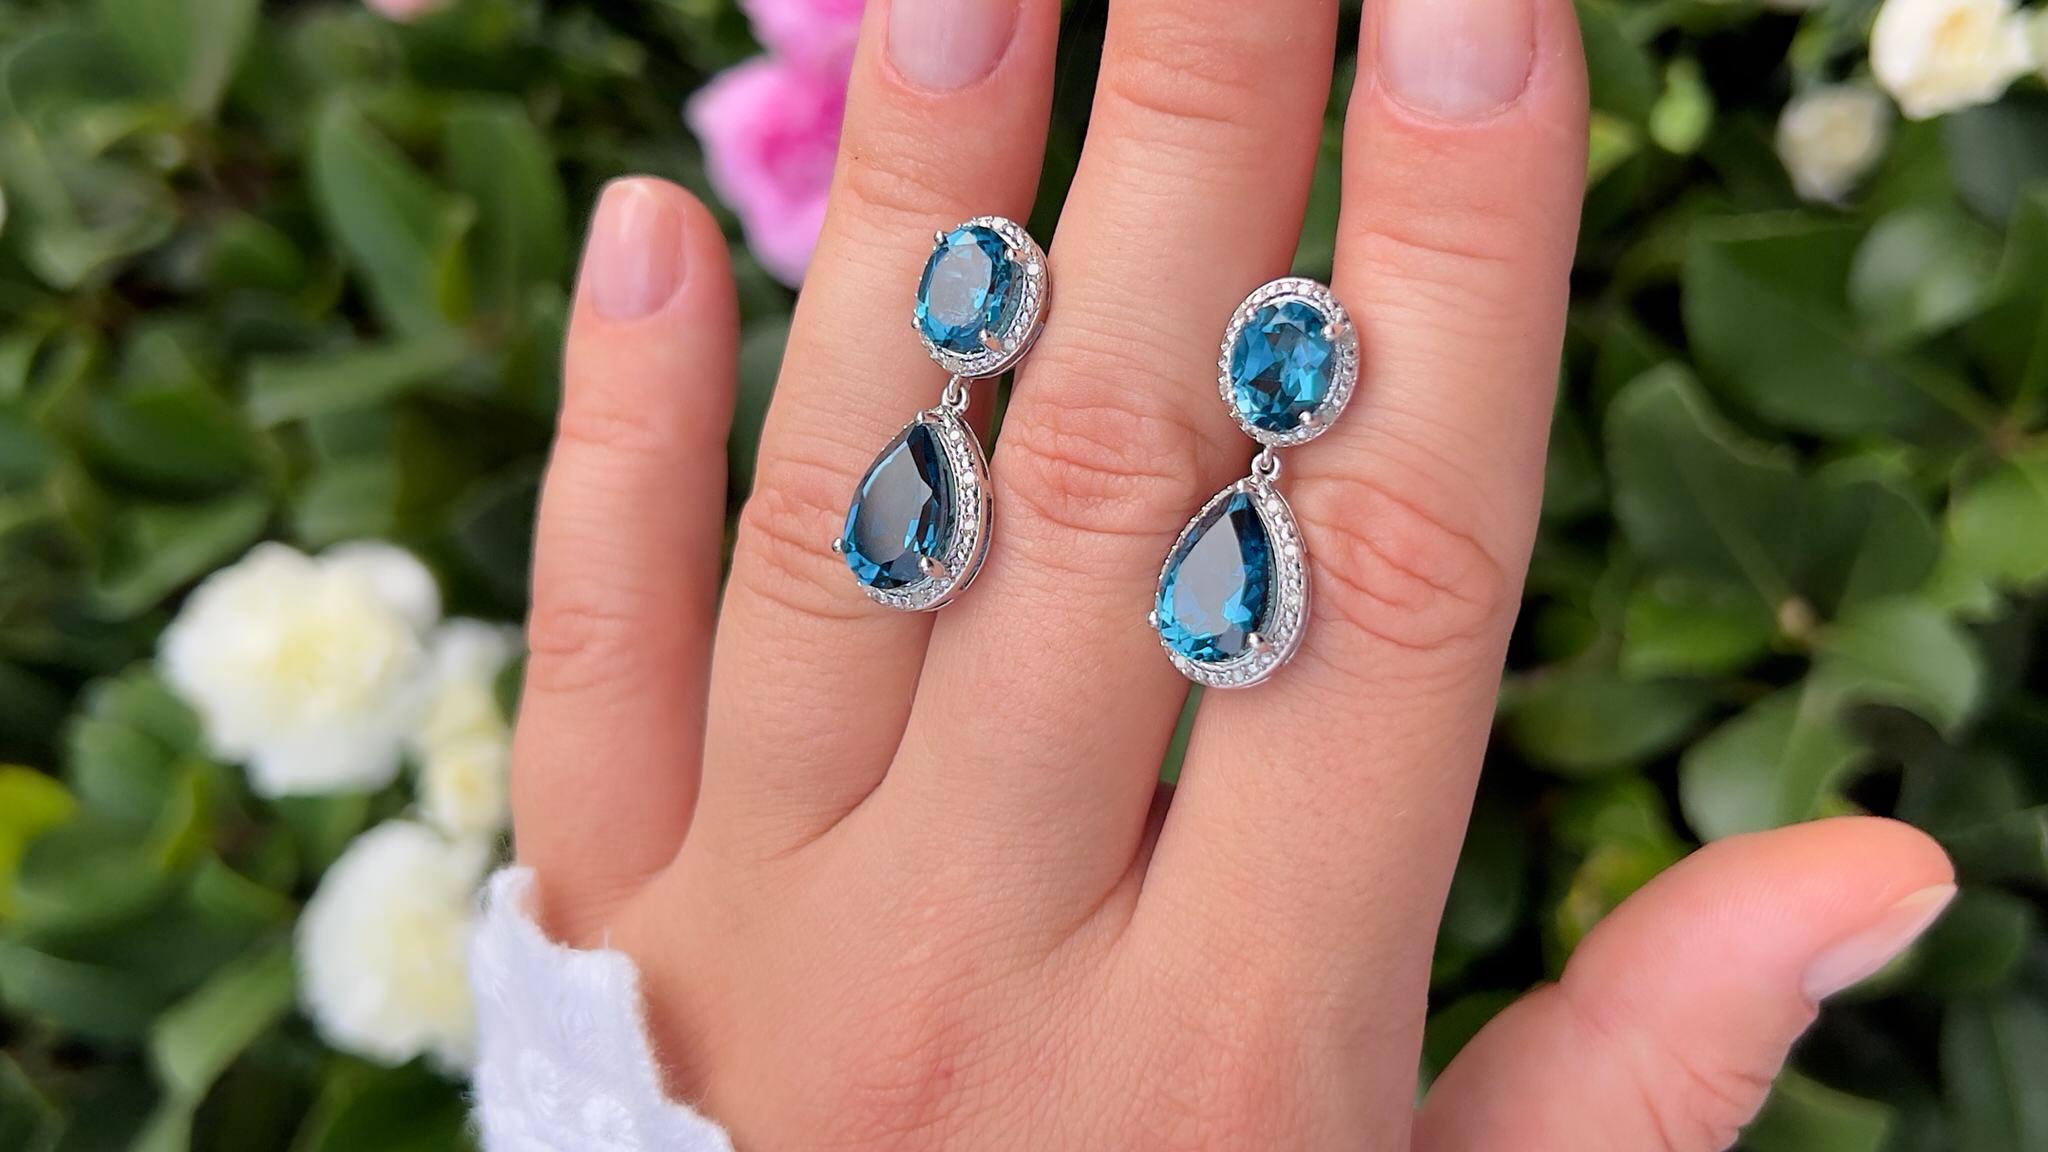 Mixed Cut London Blue Topaz Earrings Diamond Setting 11.45 Carats Total For Sale